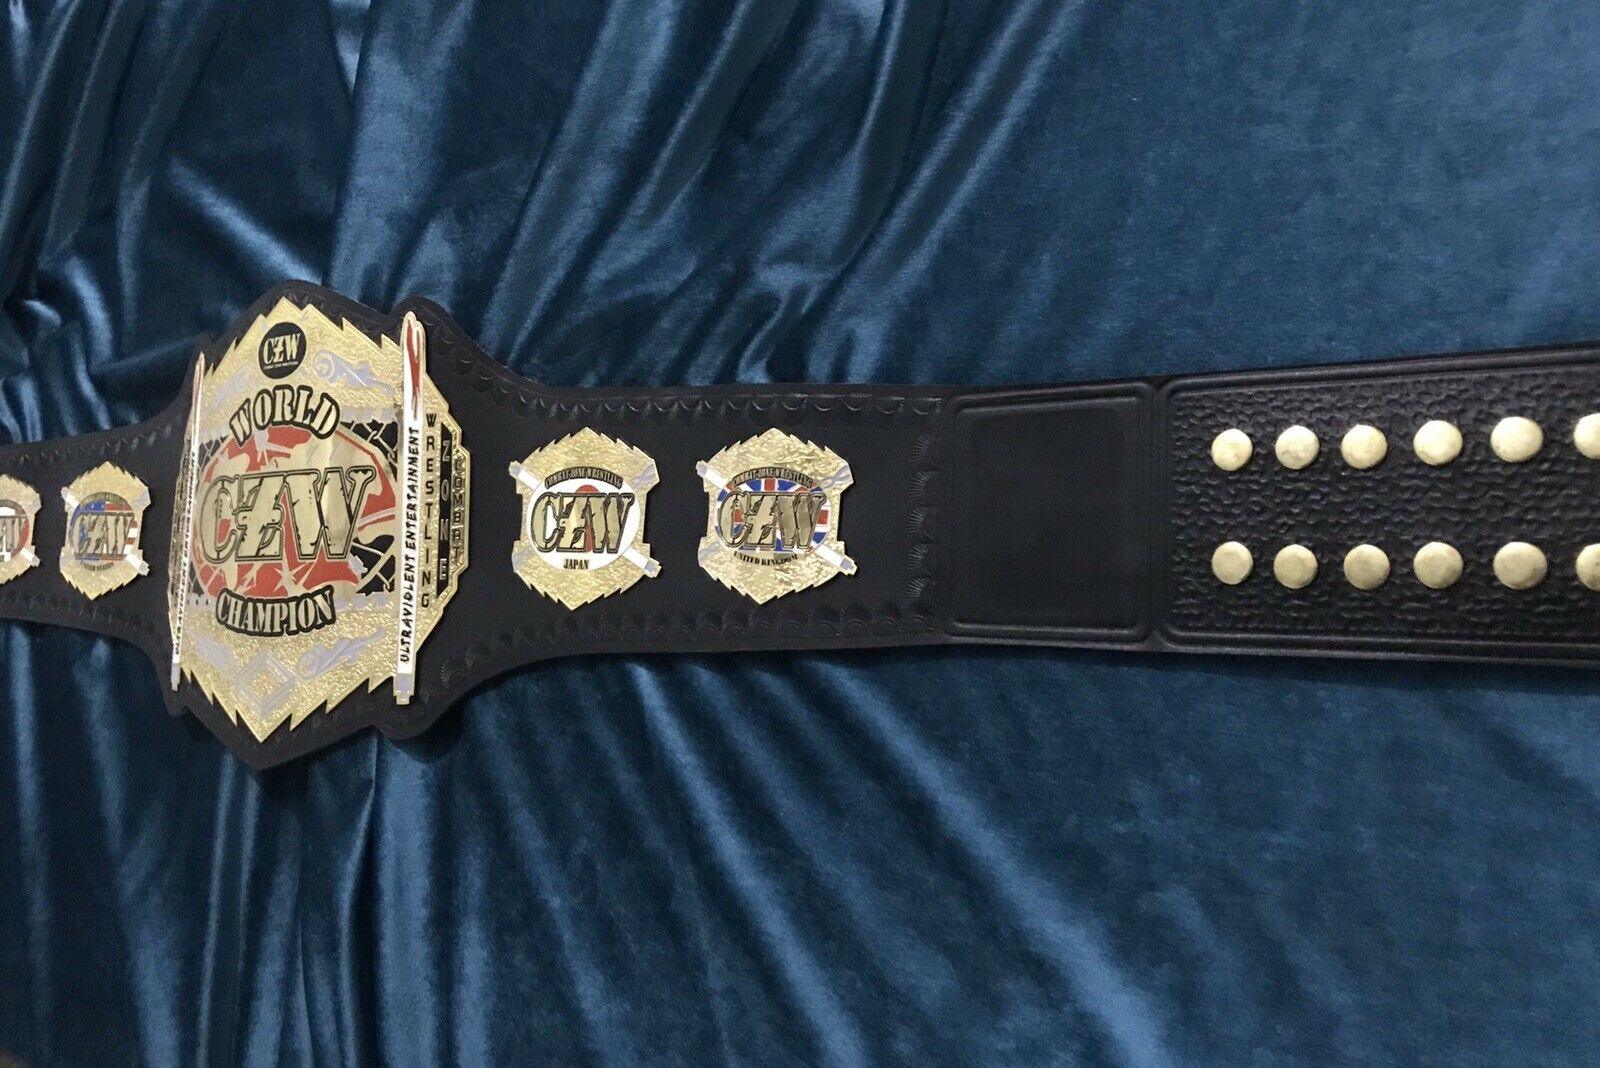 CZW Championship Belt - Zees Belts